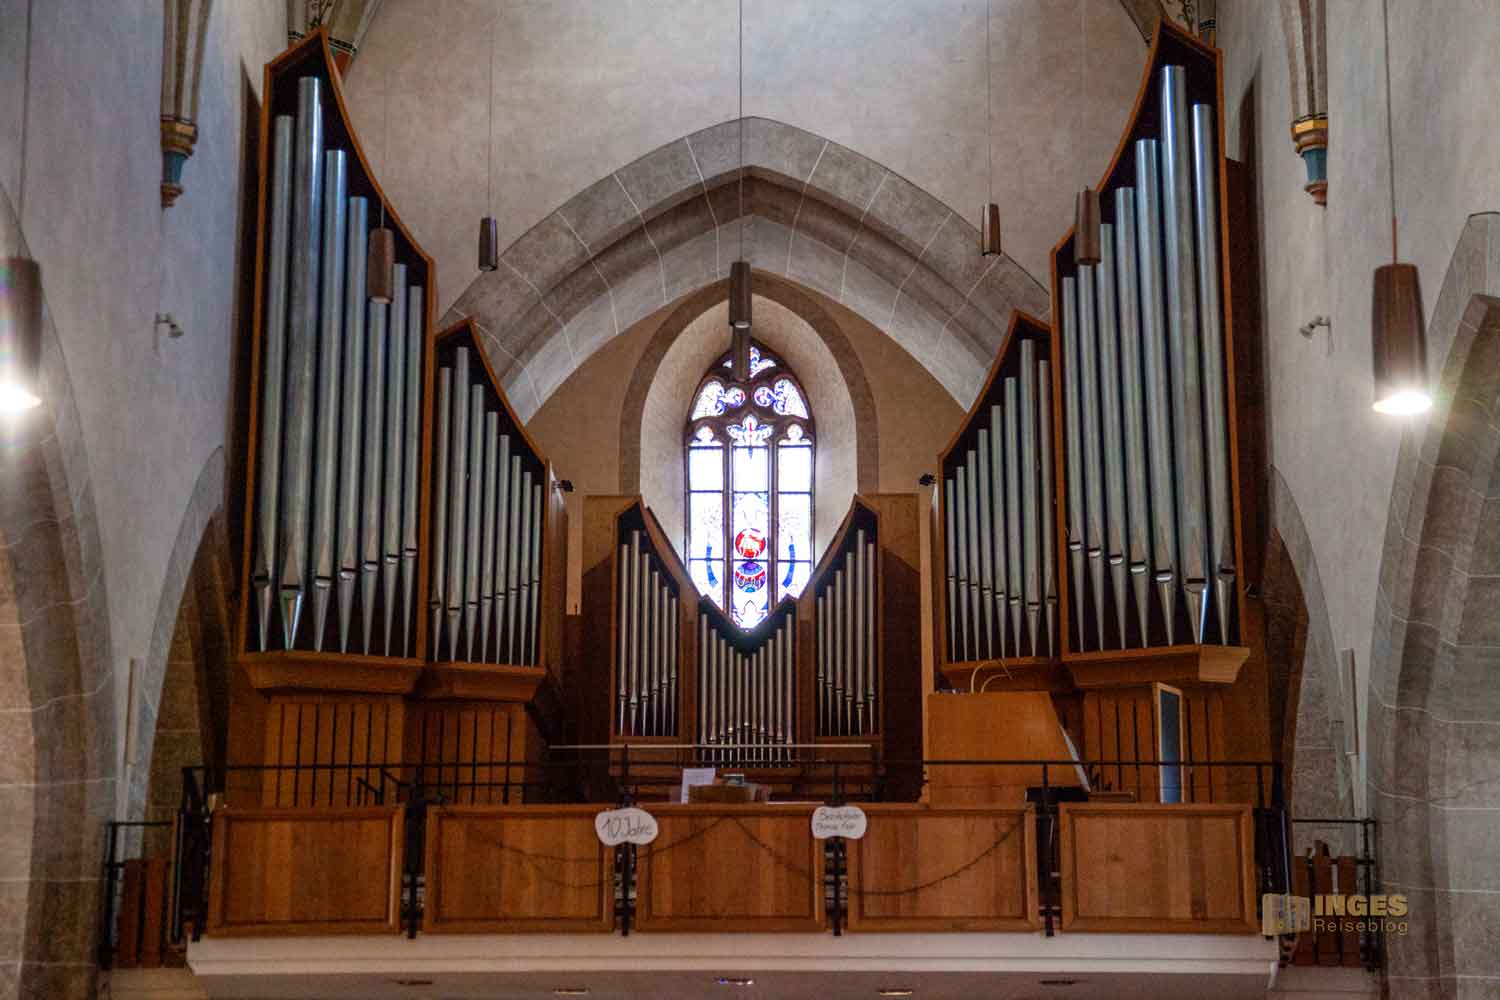 Orgel Stadtkirche Geislingen 0404-O